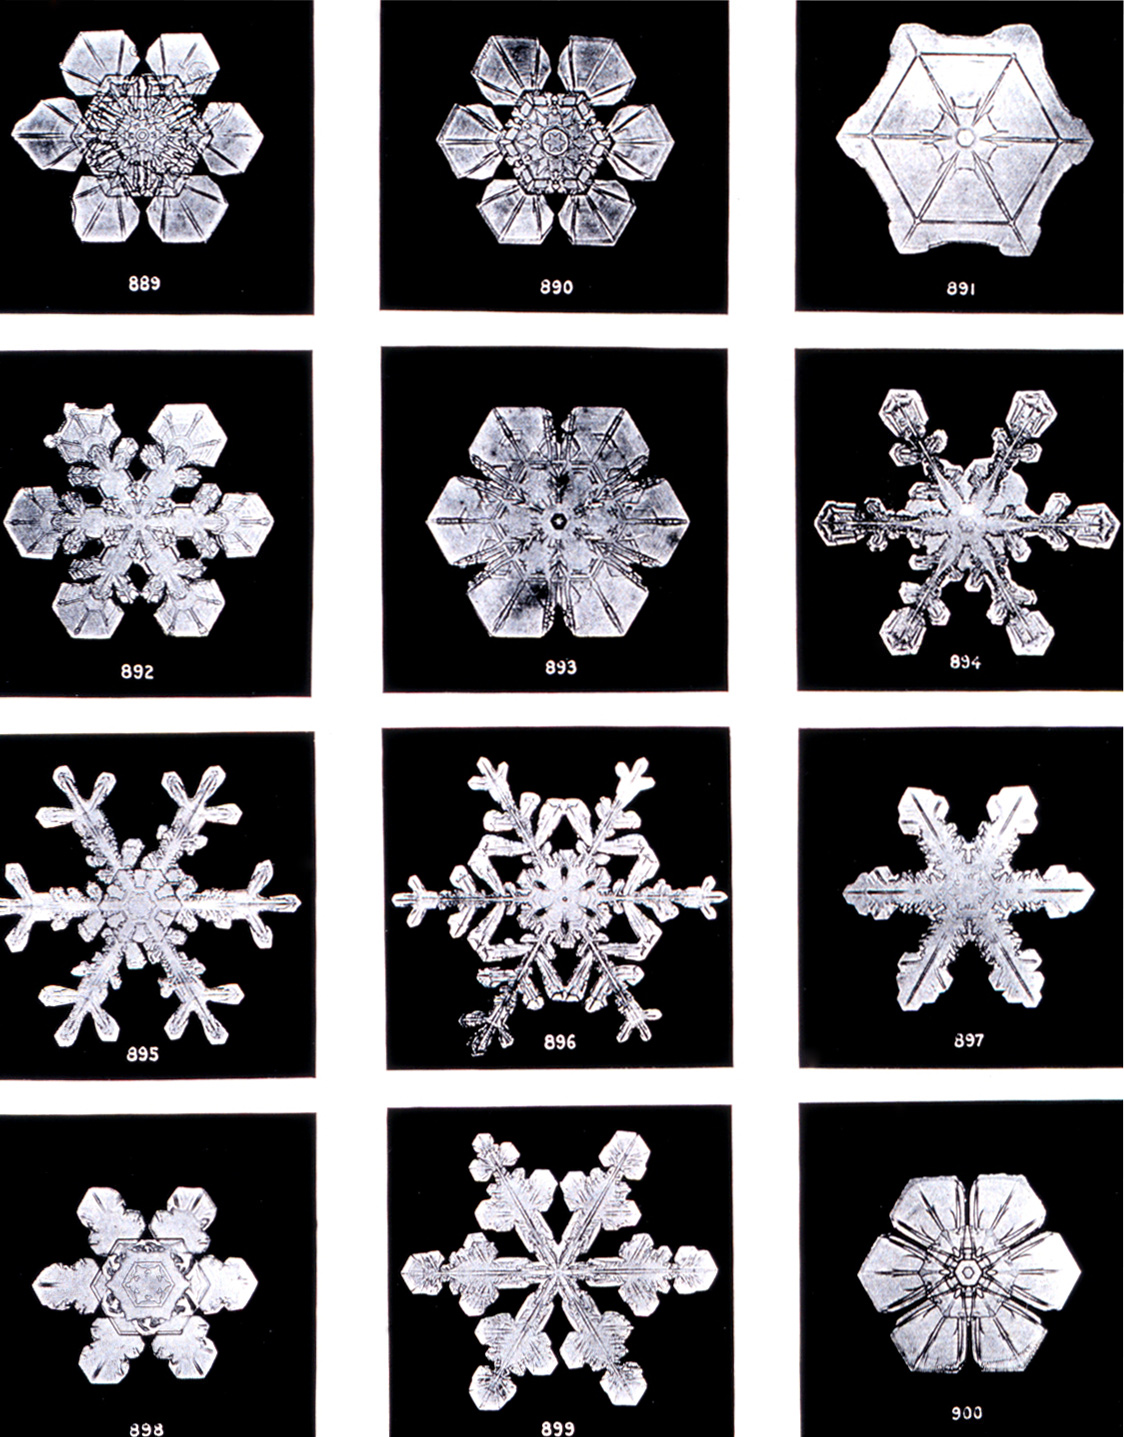 Wilson Bentley - first photographer of snowflakes